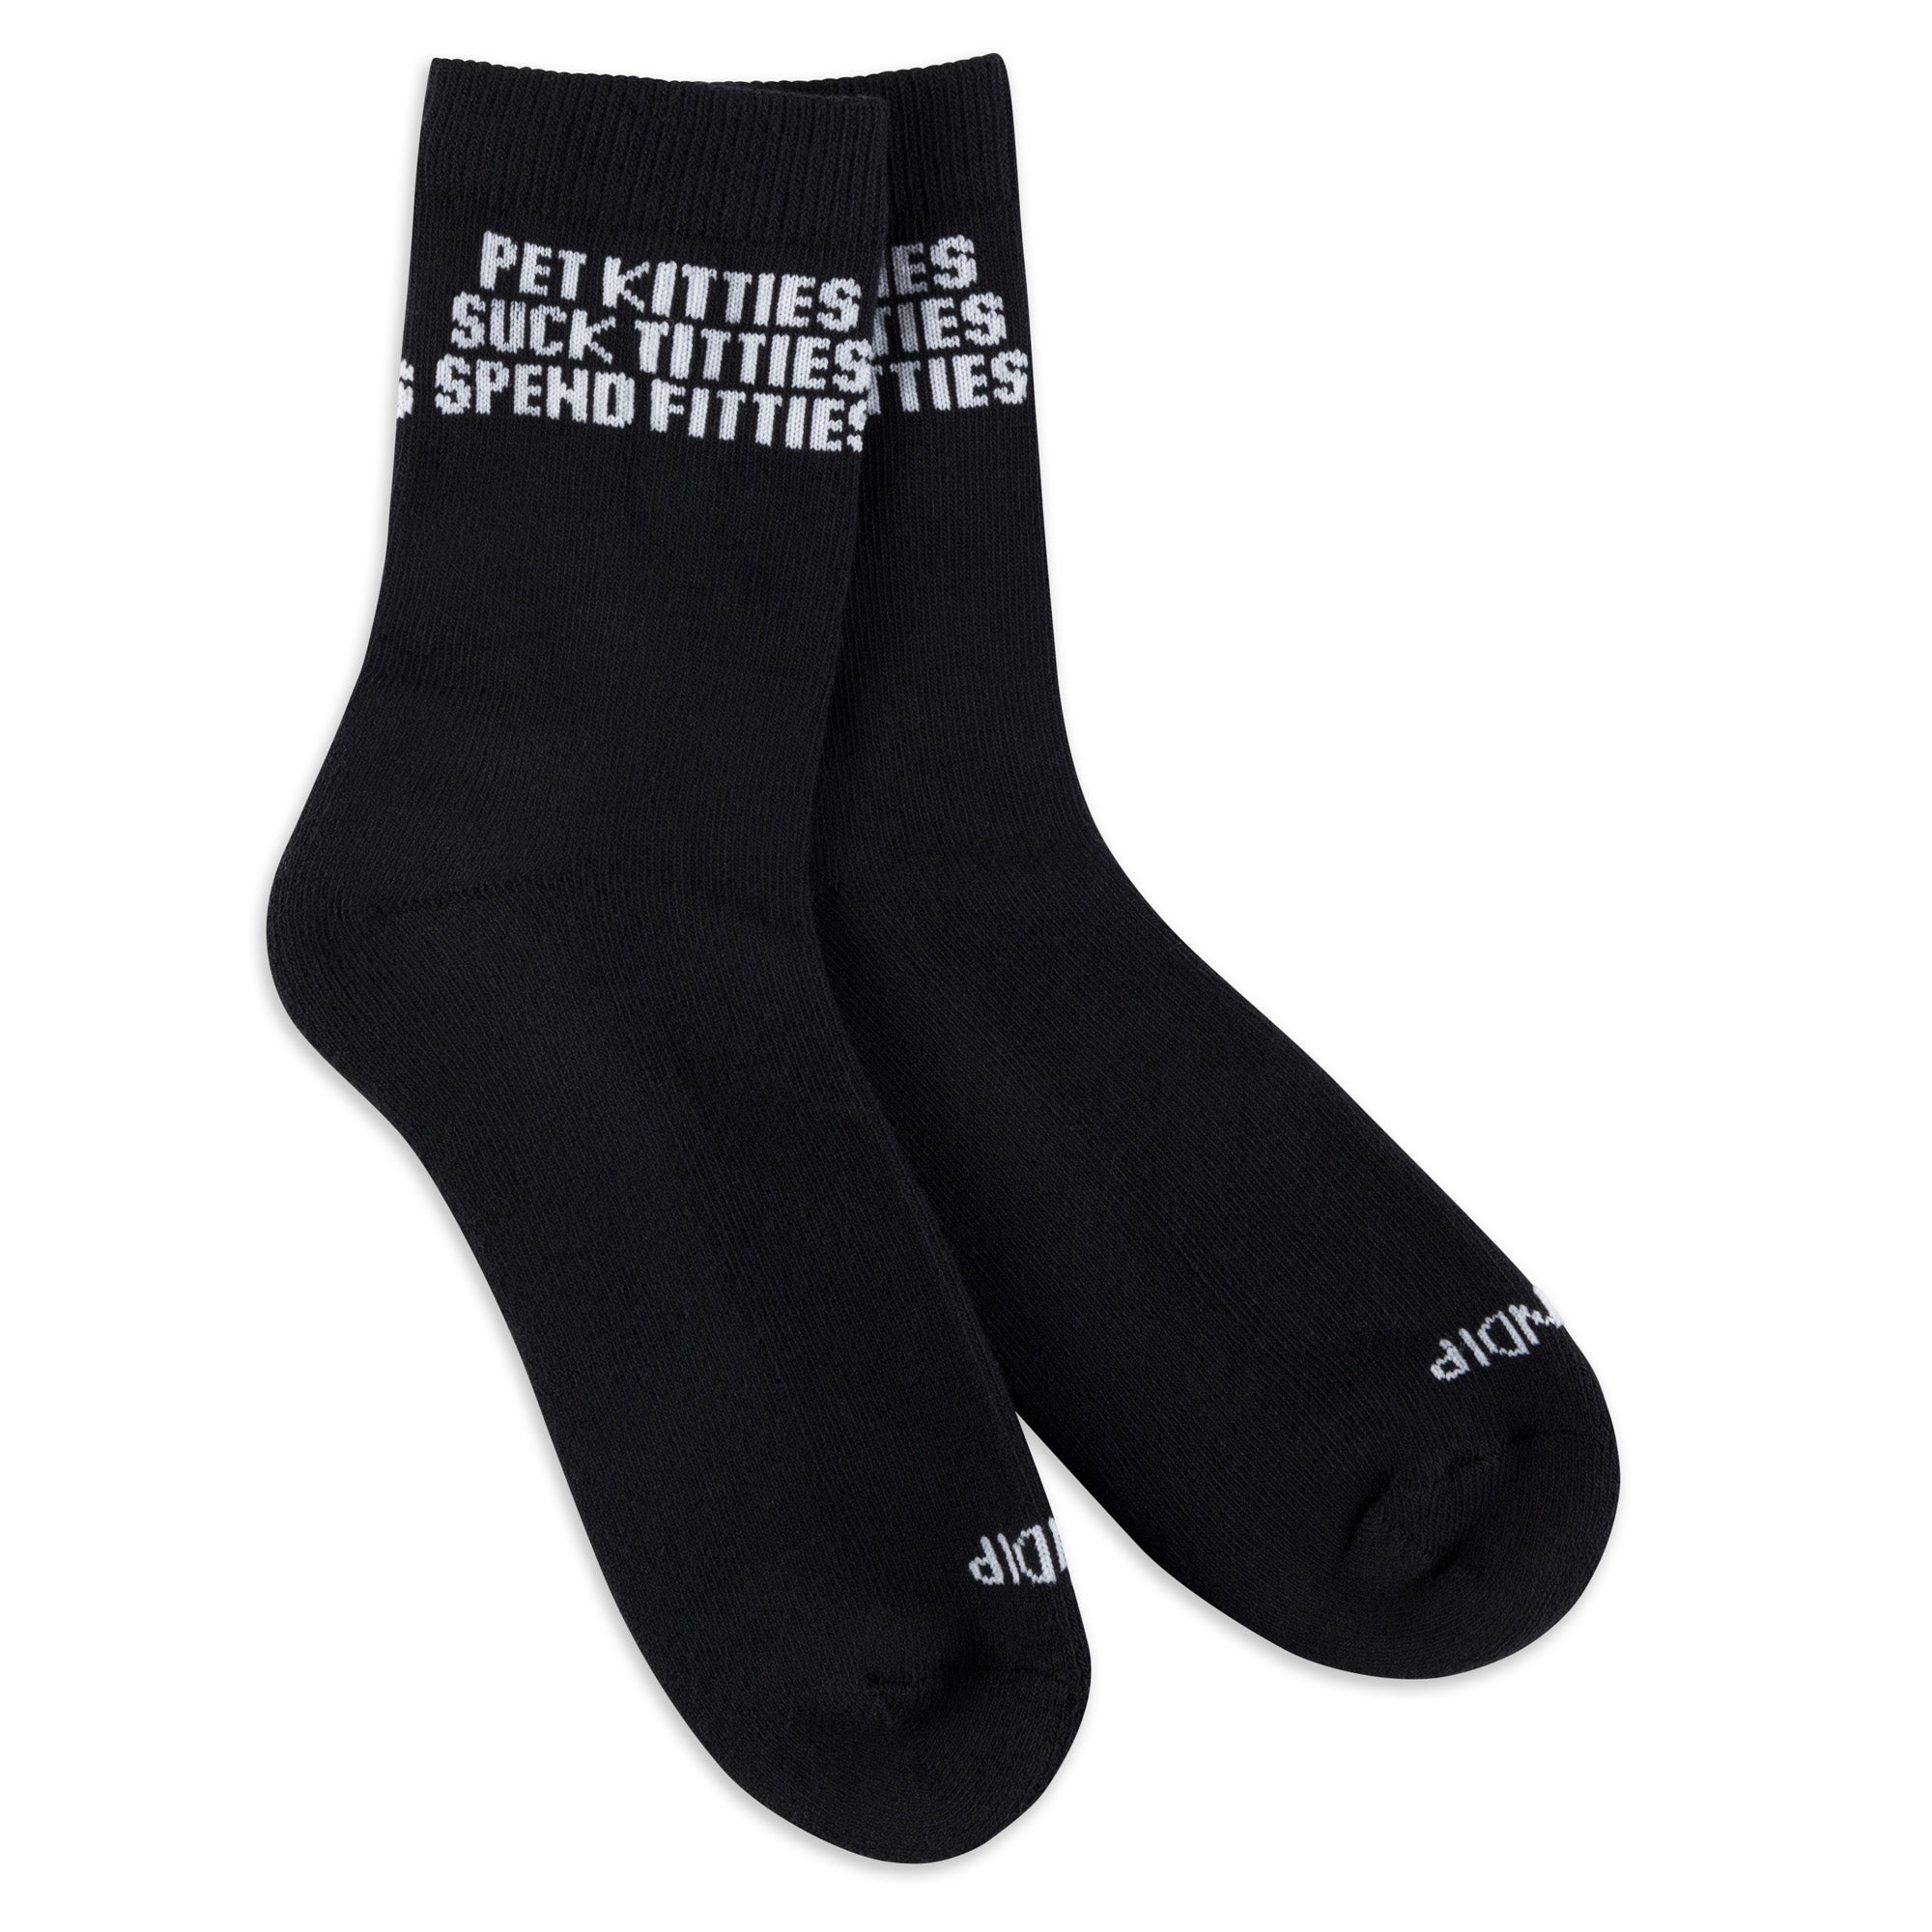 RIPNDIP Pet Kitties Mid Socks (Black)